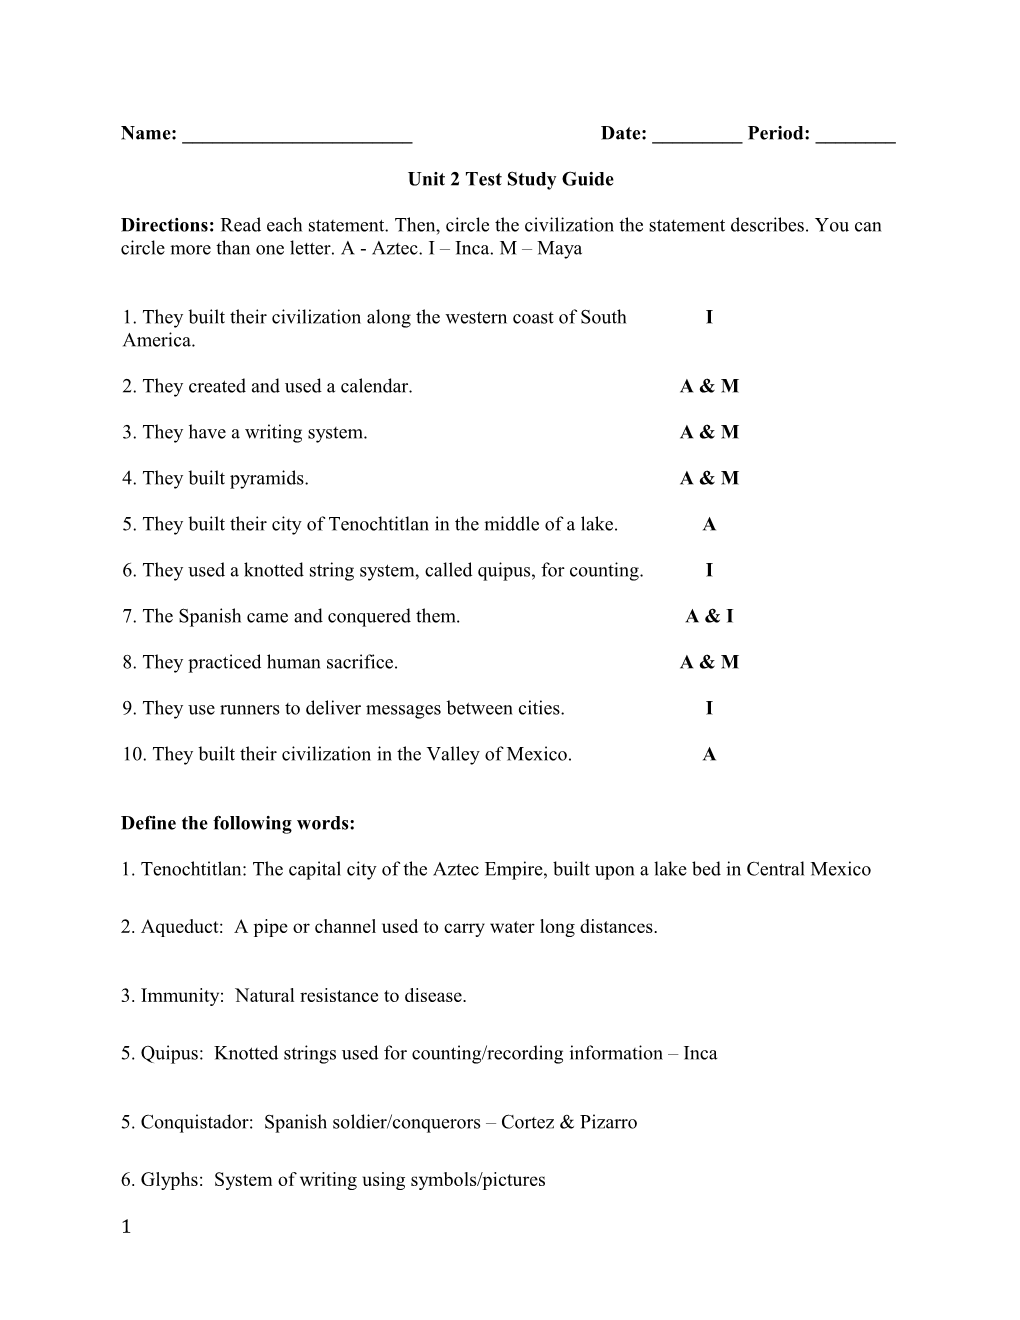 Unit 2 Test Study Guide s1